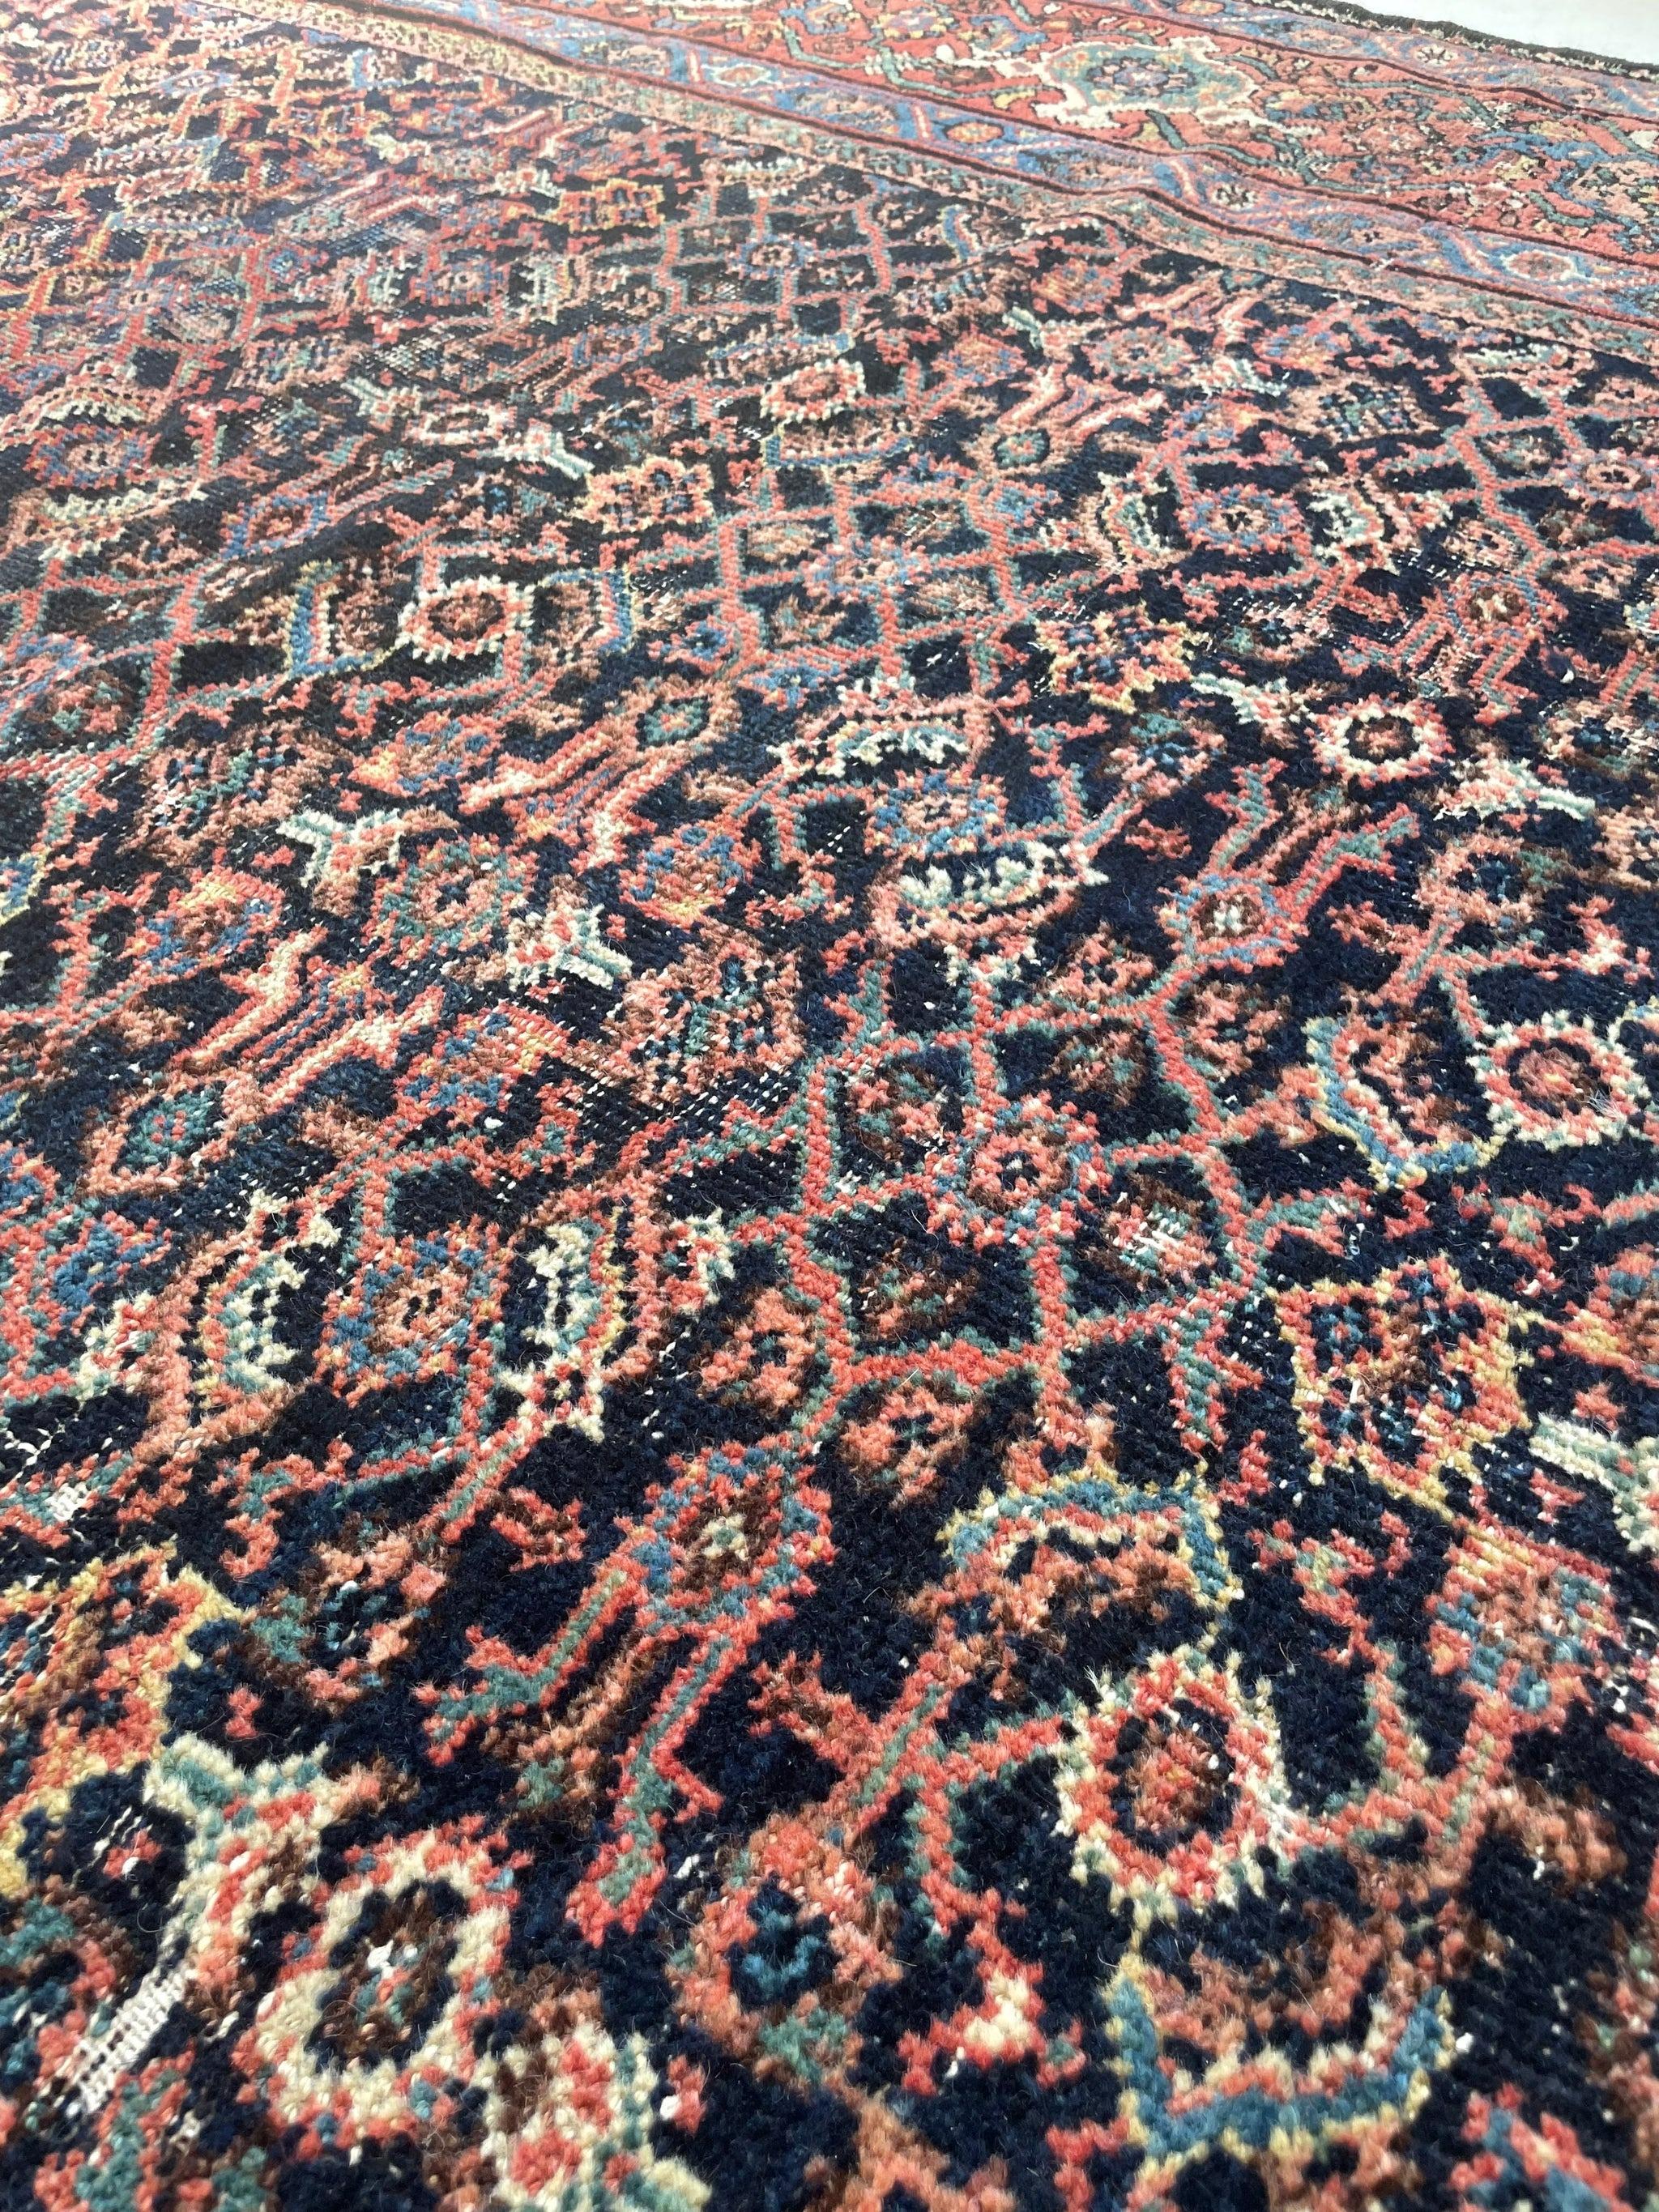 20th Century Antique Persian Carpet Rug in Deep Old-World Indigo, circa 1900-1915's For Sale